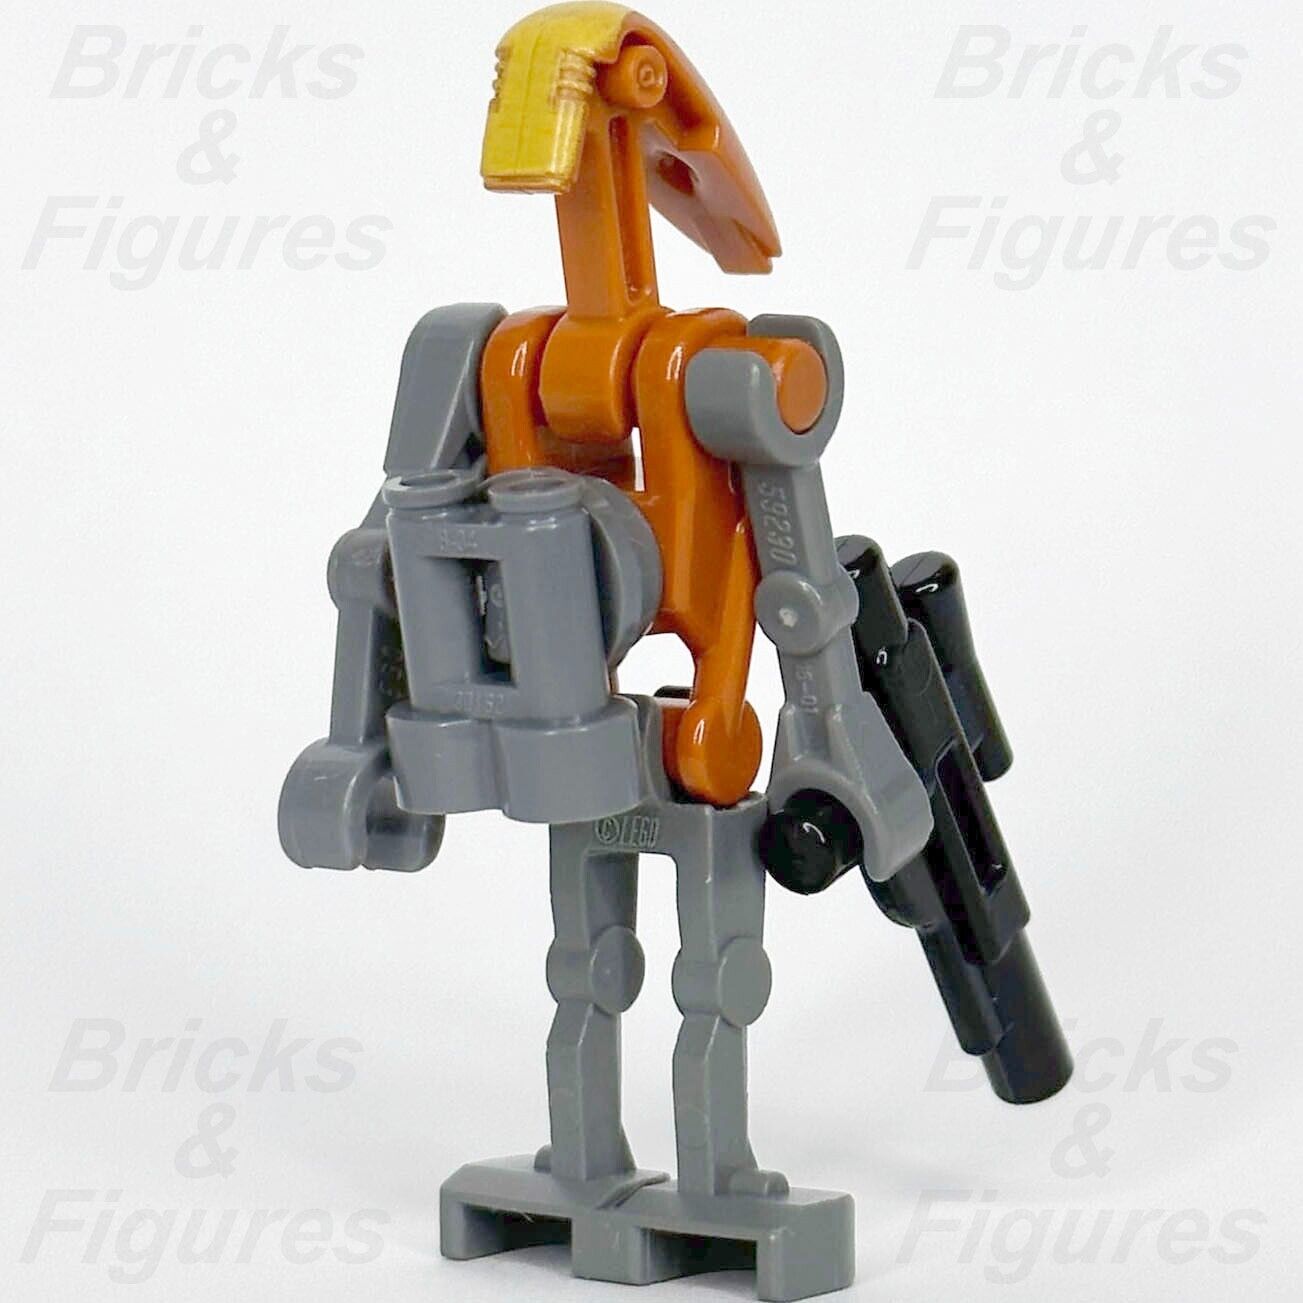 LEGO Star Wars Rocket Battle Droid Commander Minifigure Clone Wars 8086 sw0227 - Bricks & Figures